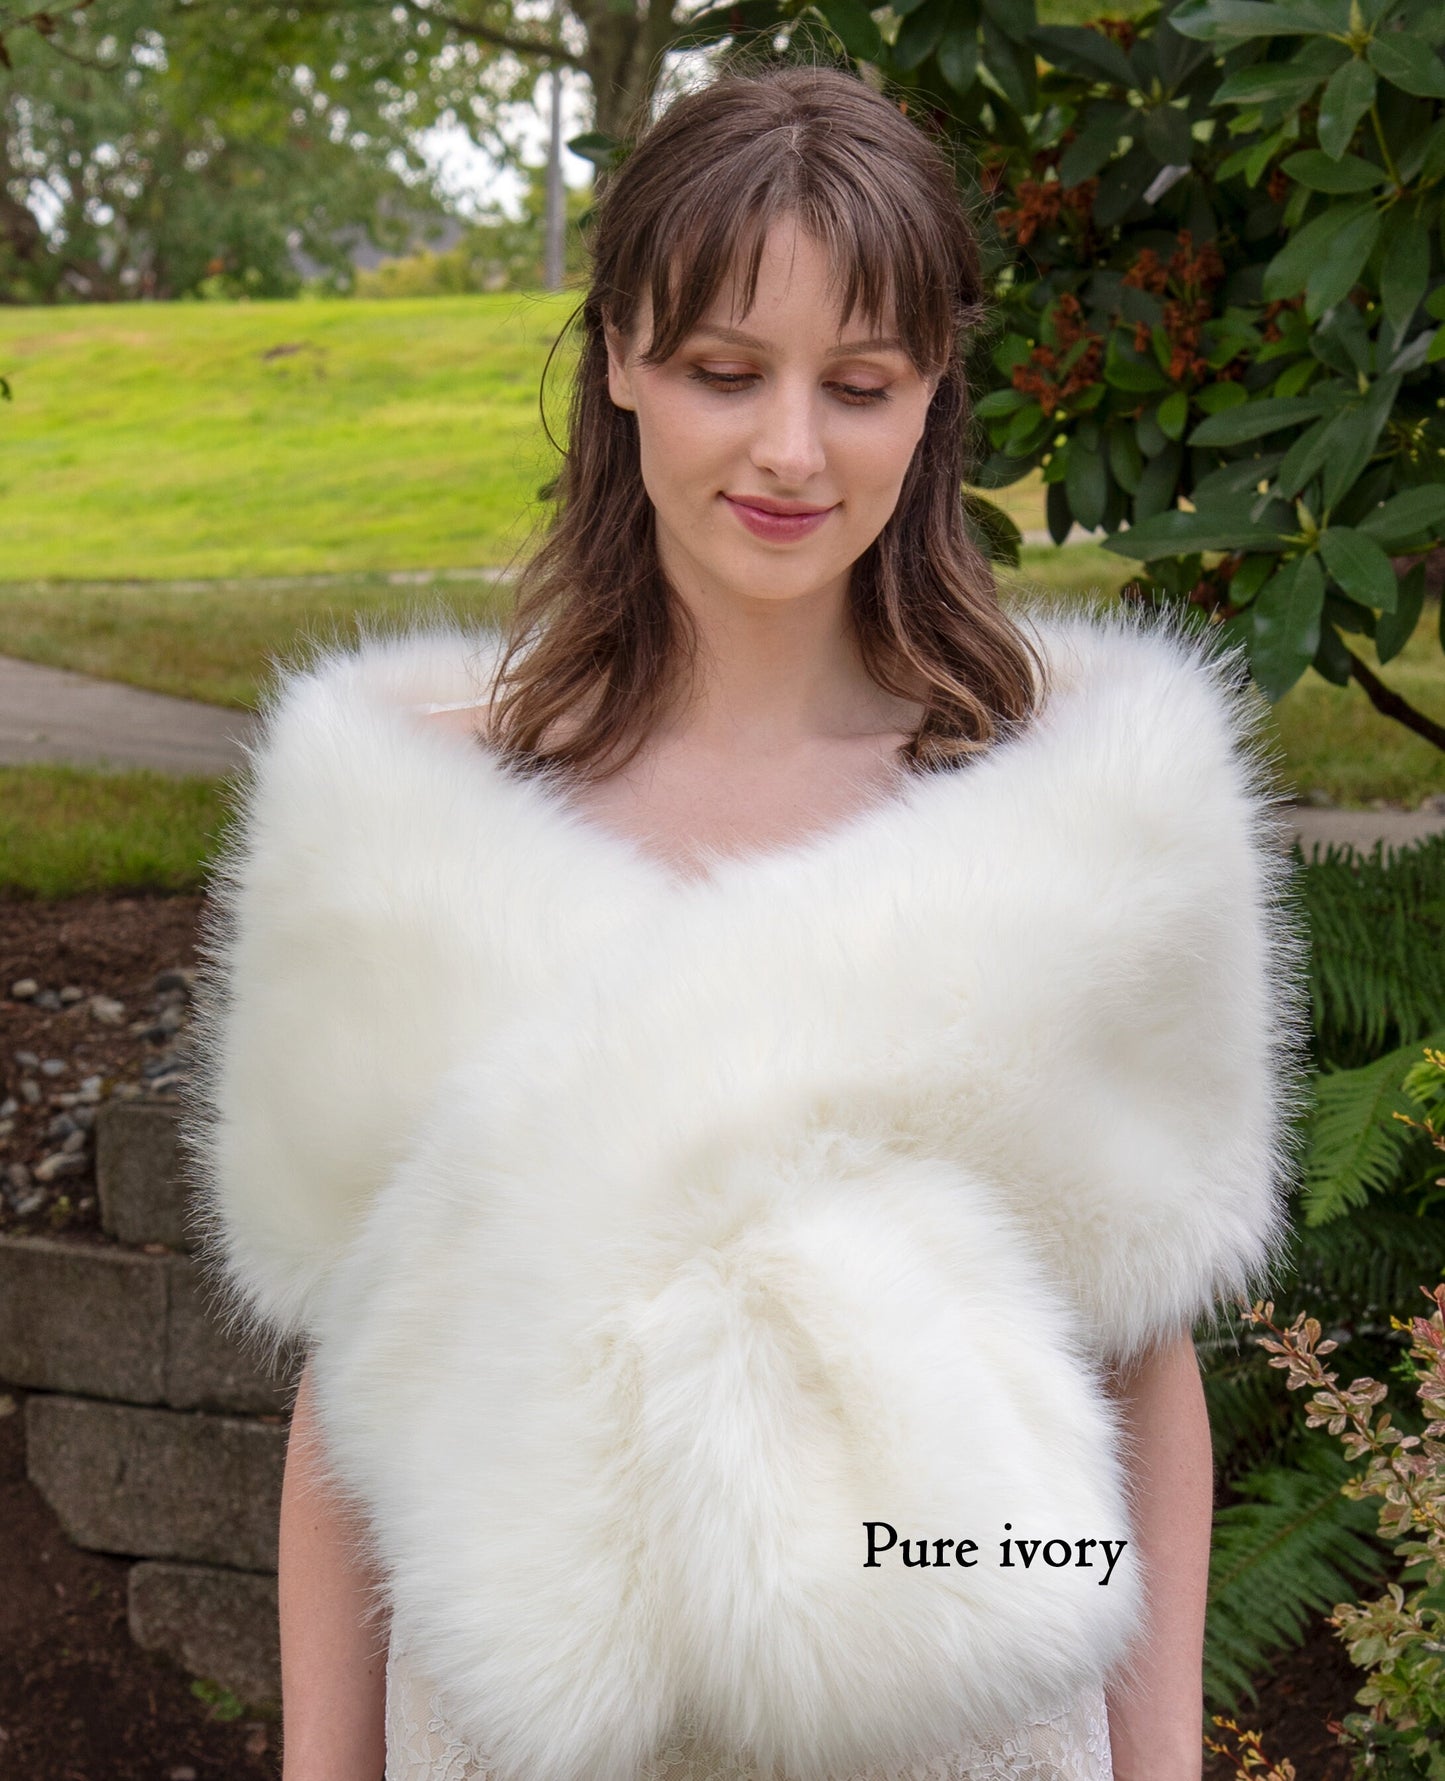 Ivory faux fur shawl with brown tips faux fur wrap faux fur stole wedding shrug bridal shrug faux fur cape B005-Ivory